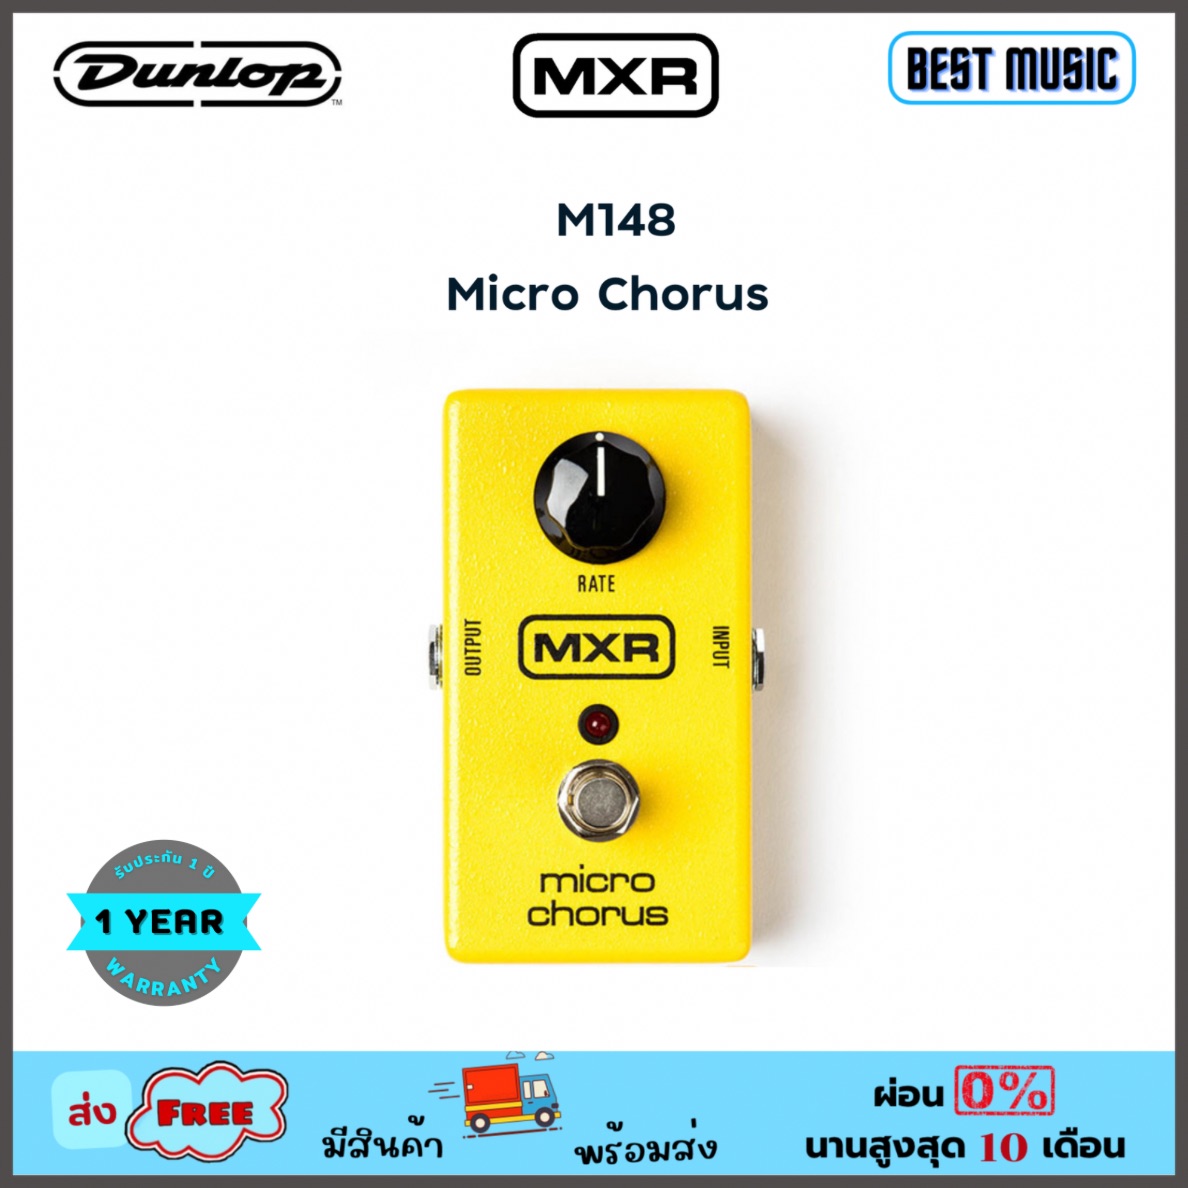 Dunlop MXR M148 Micro Chorus เอฟเฟคกีต้าร์เสียงคอรัส | Lazada.co.th